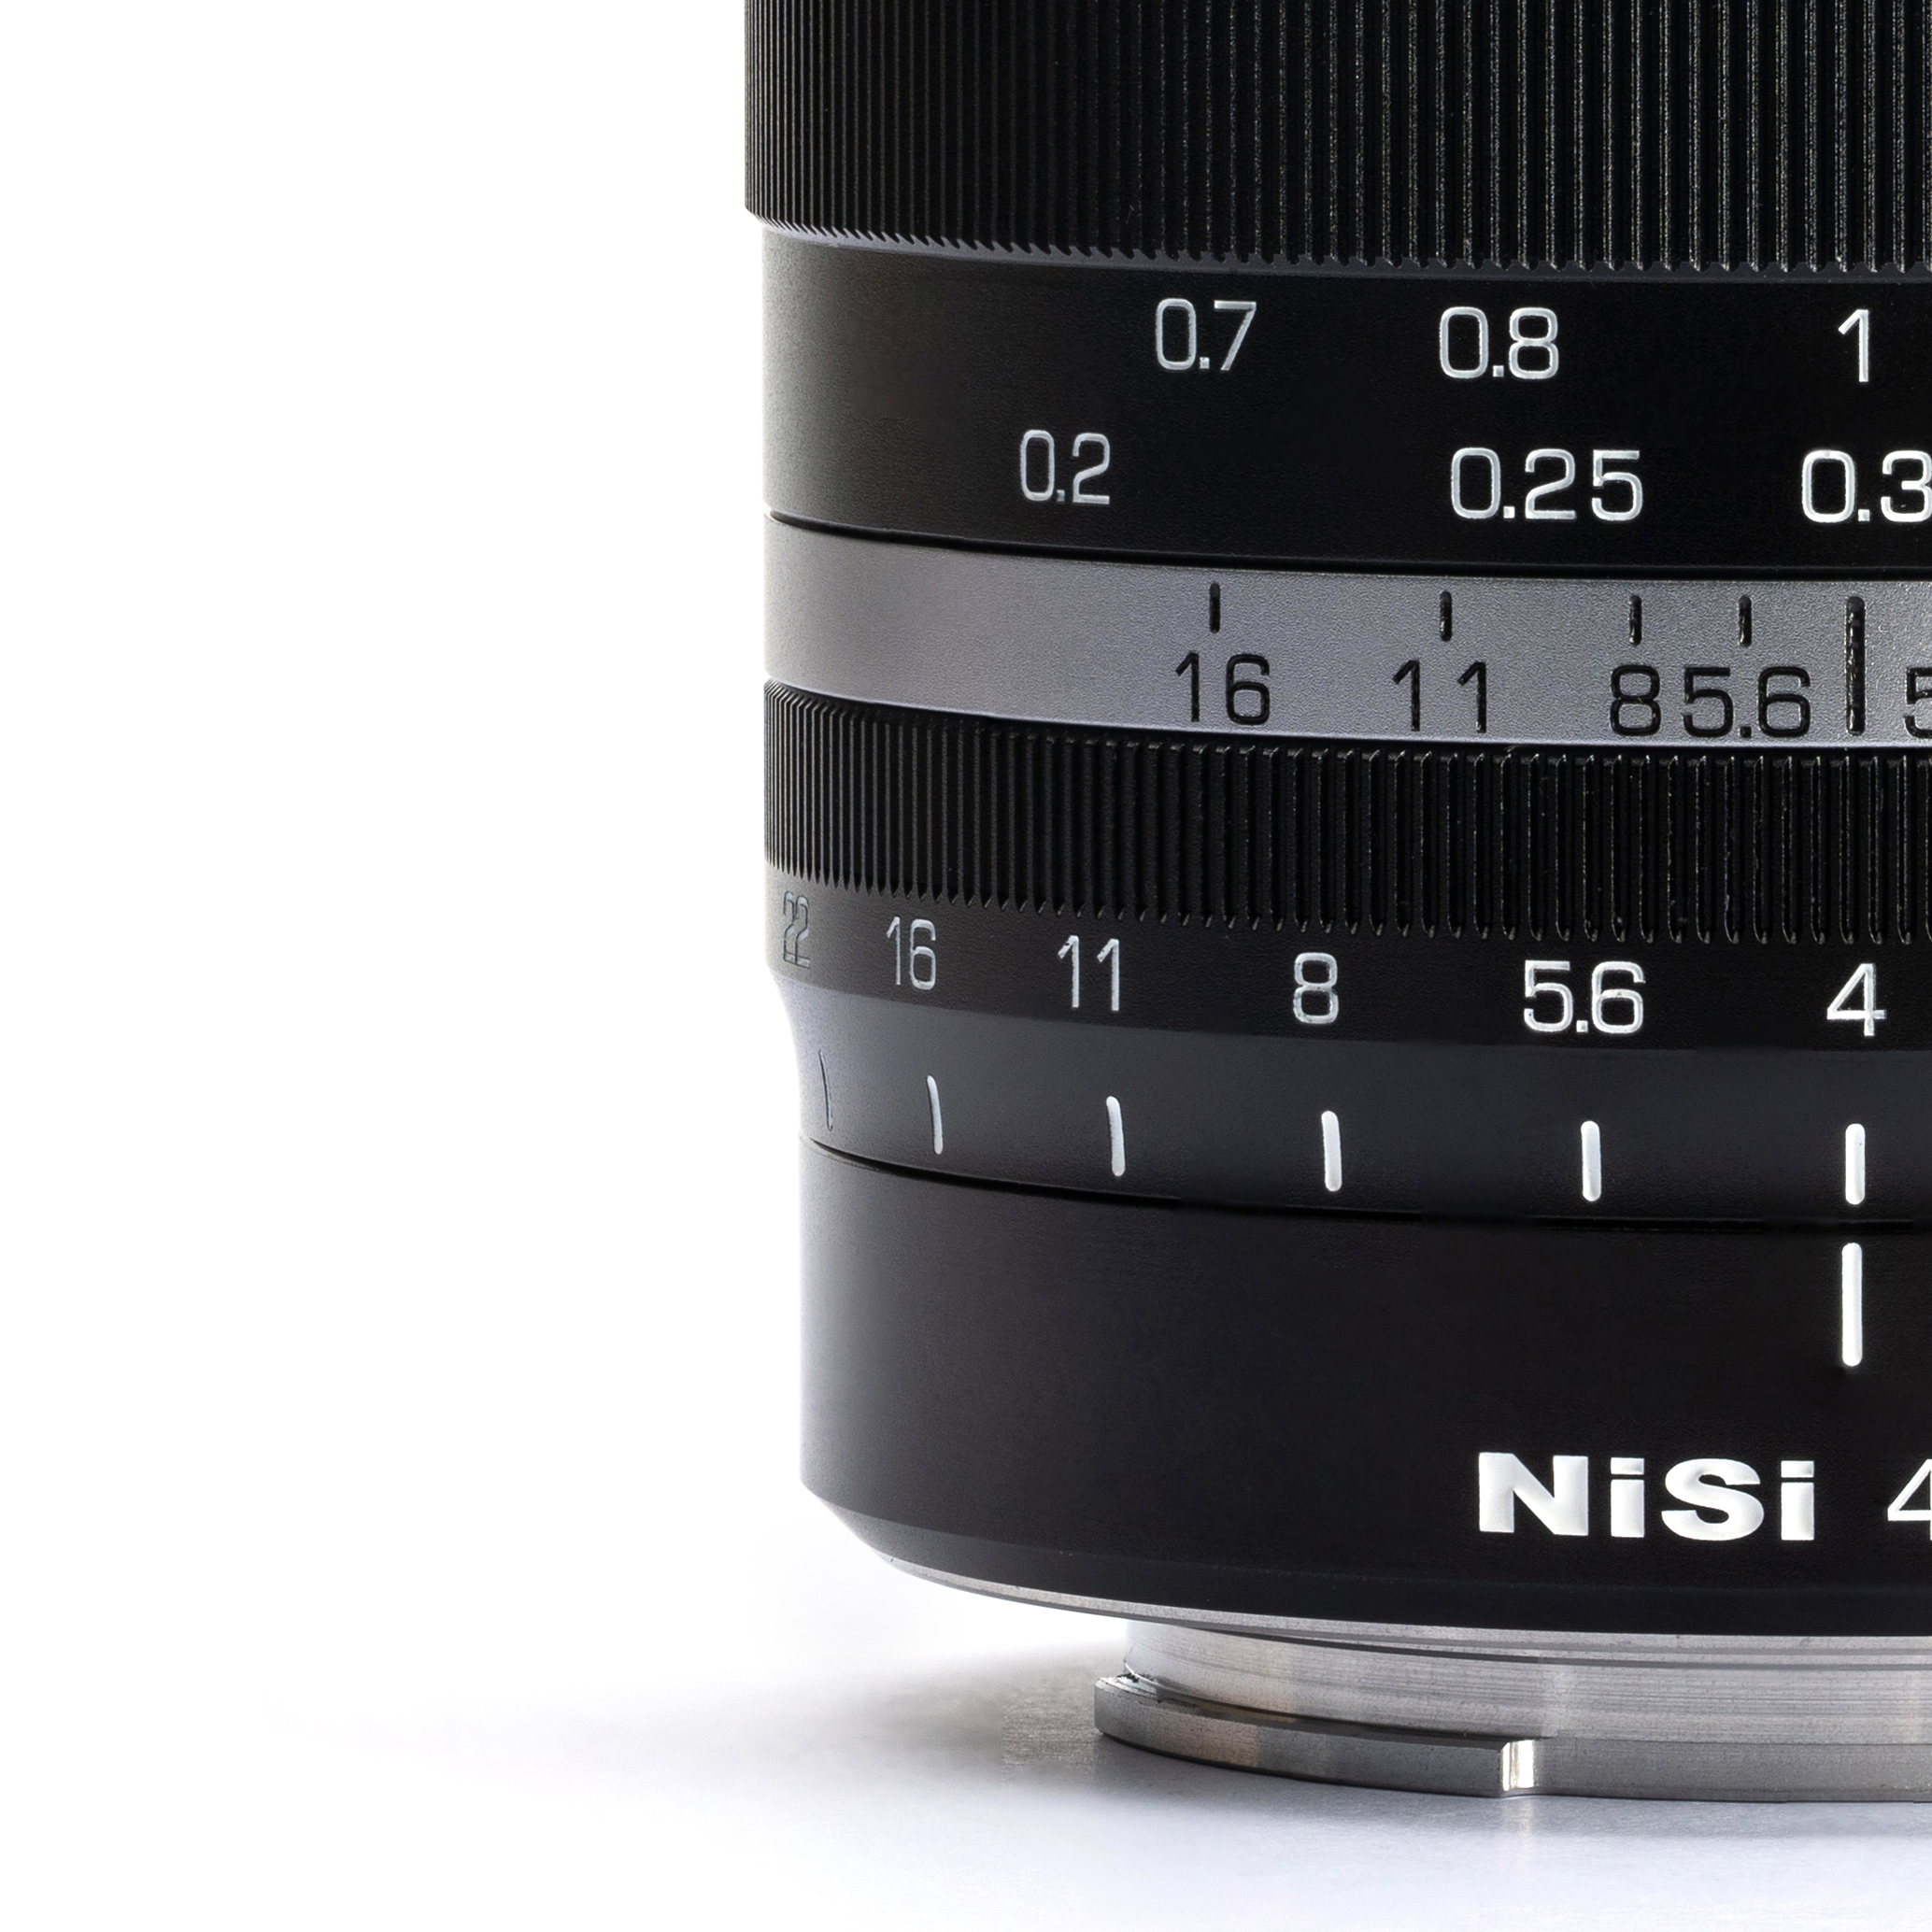 NiSi 15mm F4.0 Closeup Frontal unten links